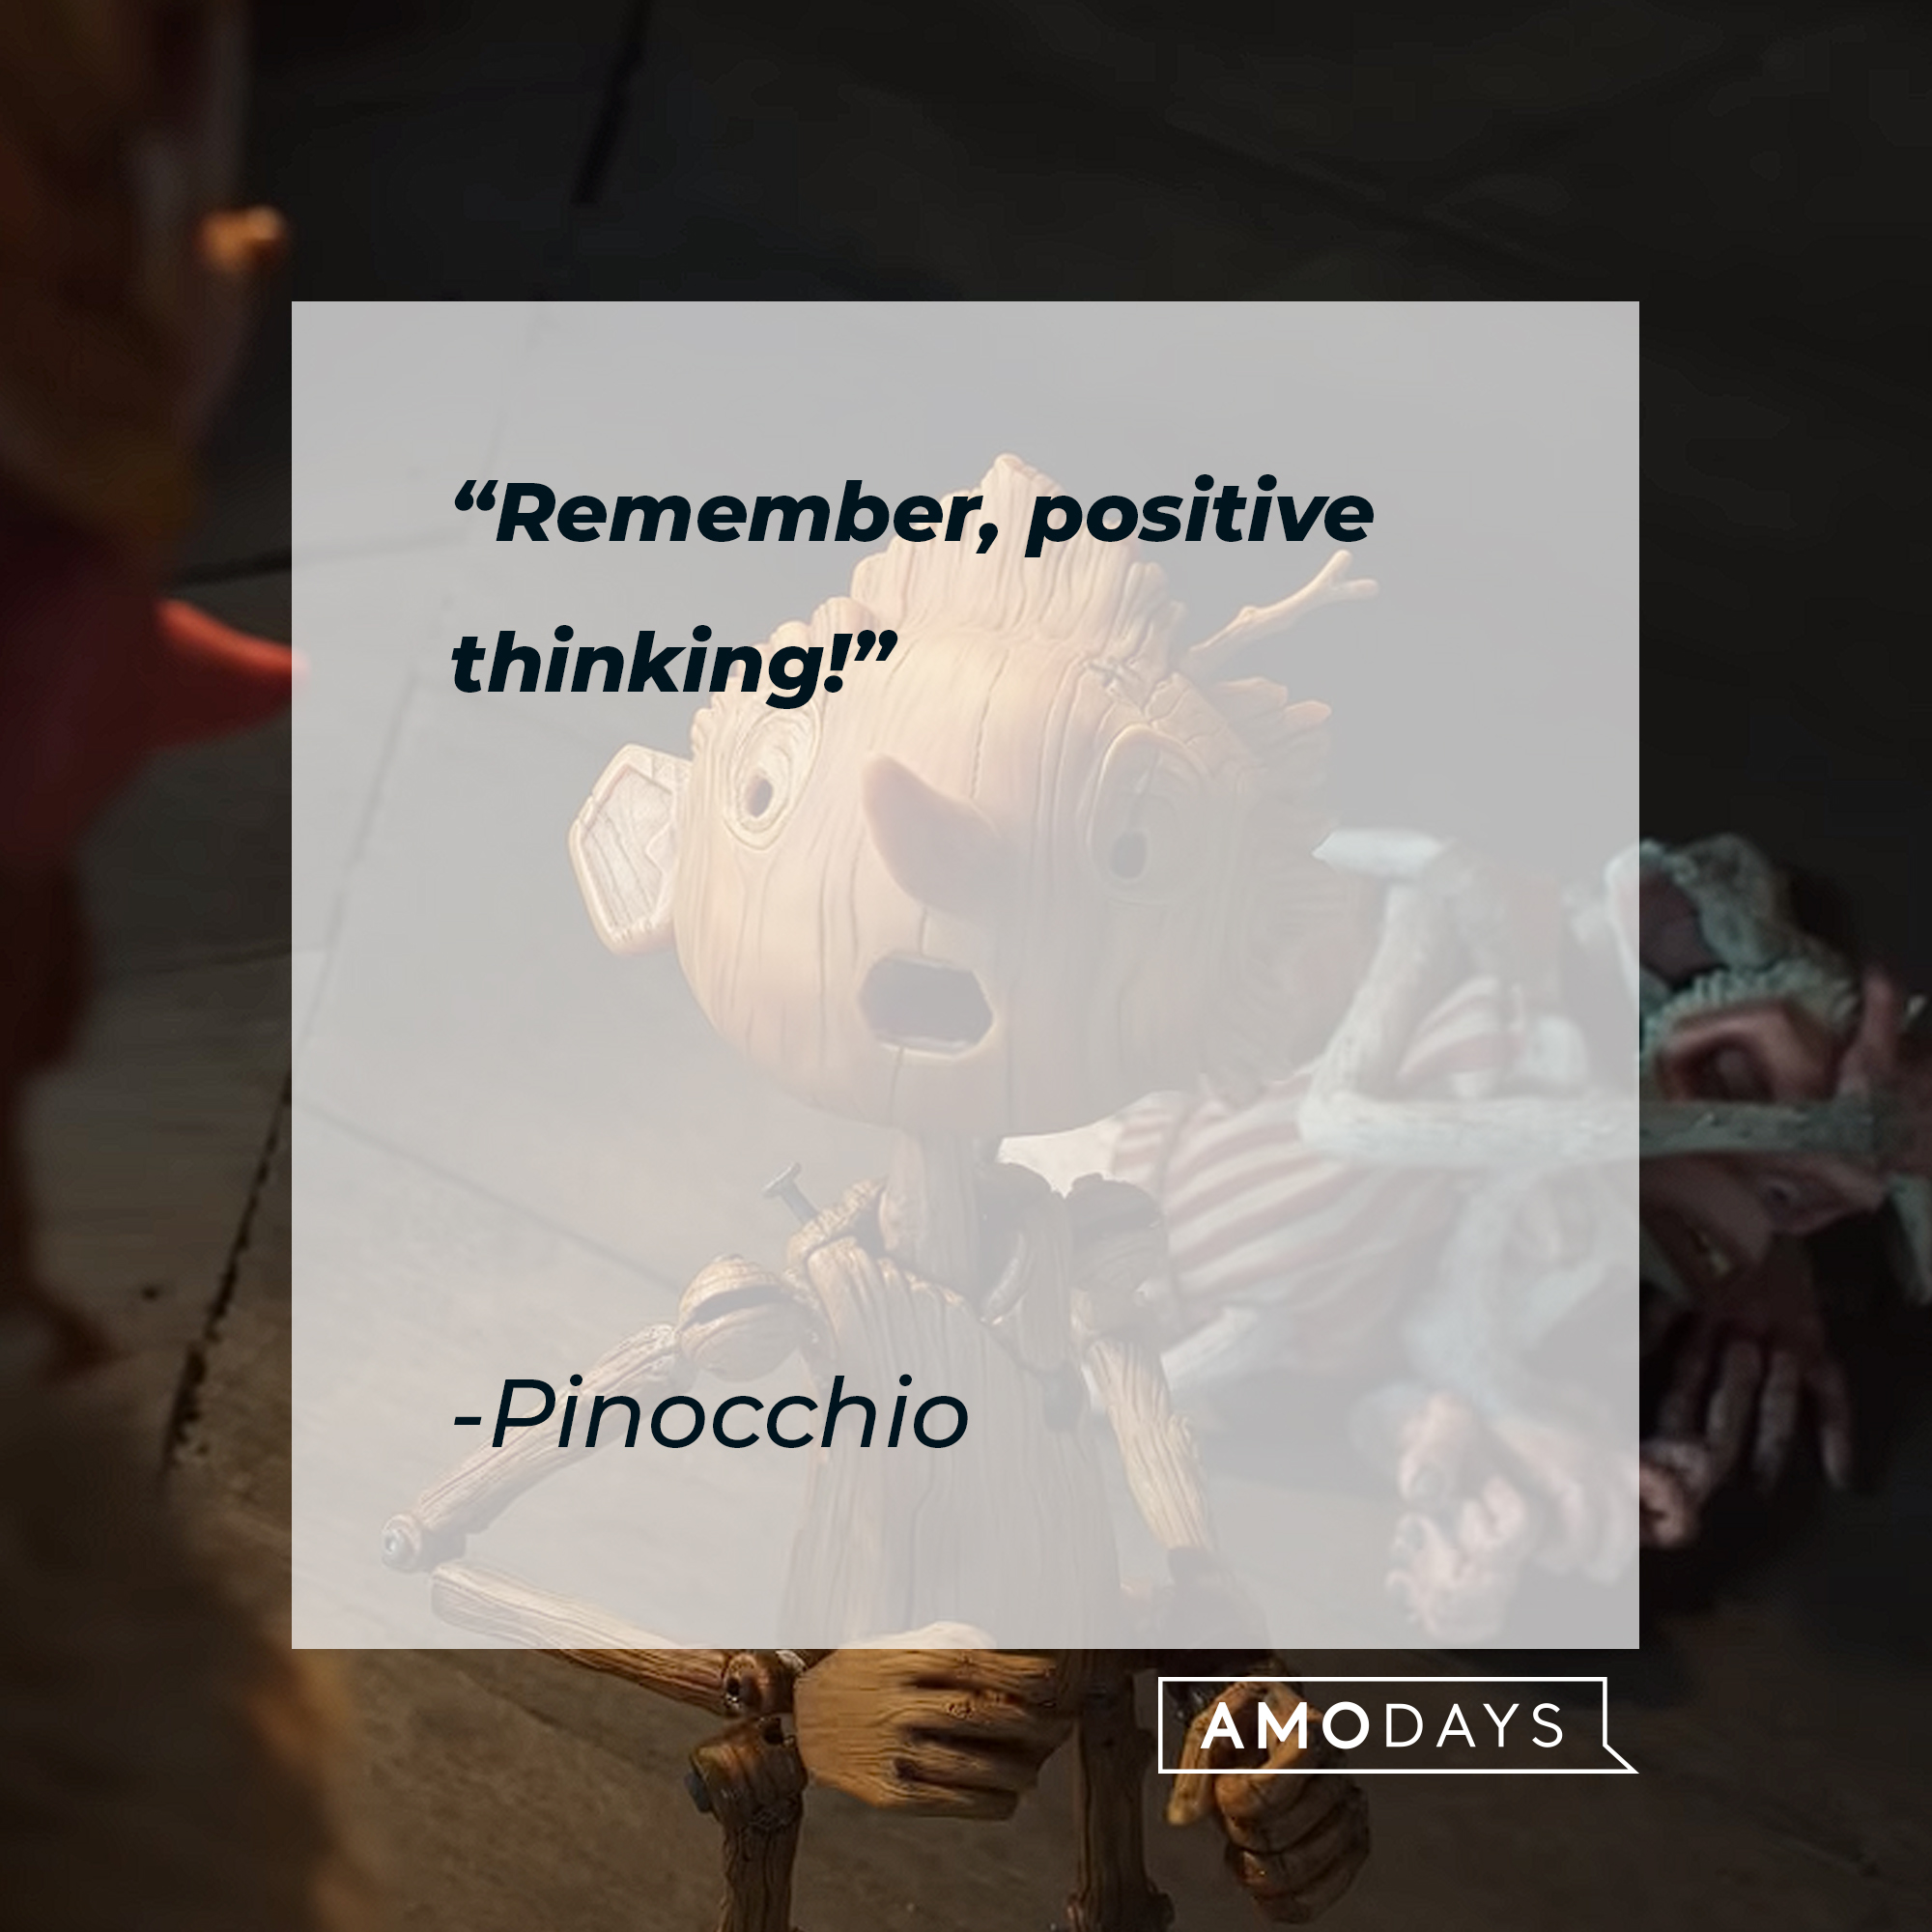 Pinocchio's quote: "Remember, positive thinking!" | Image: AmoDays